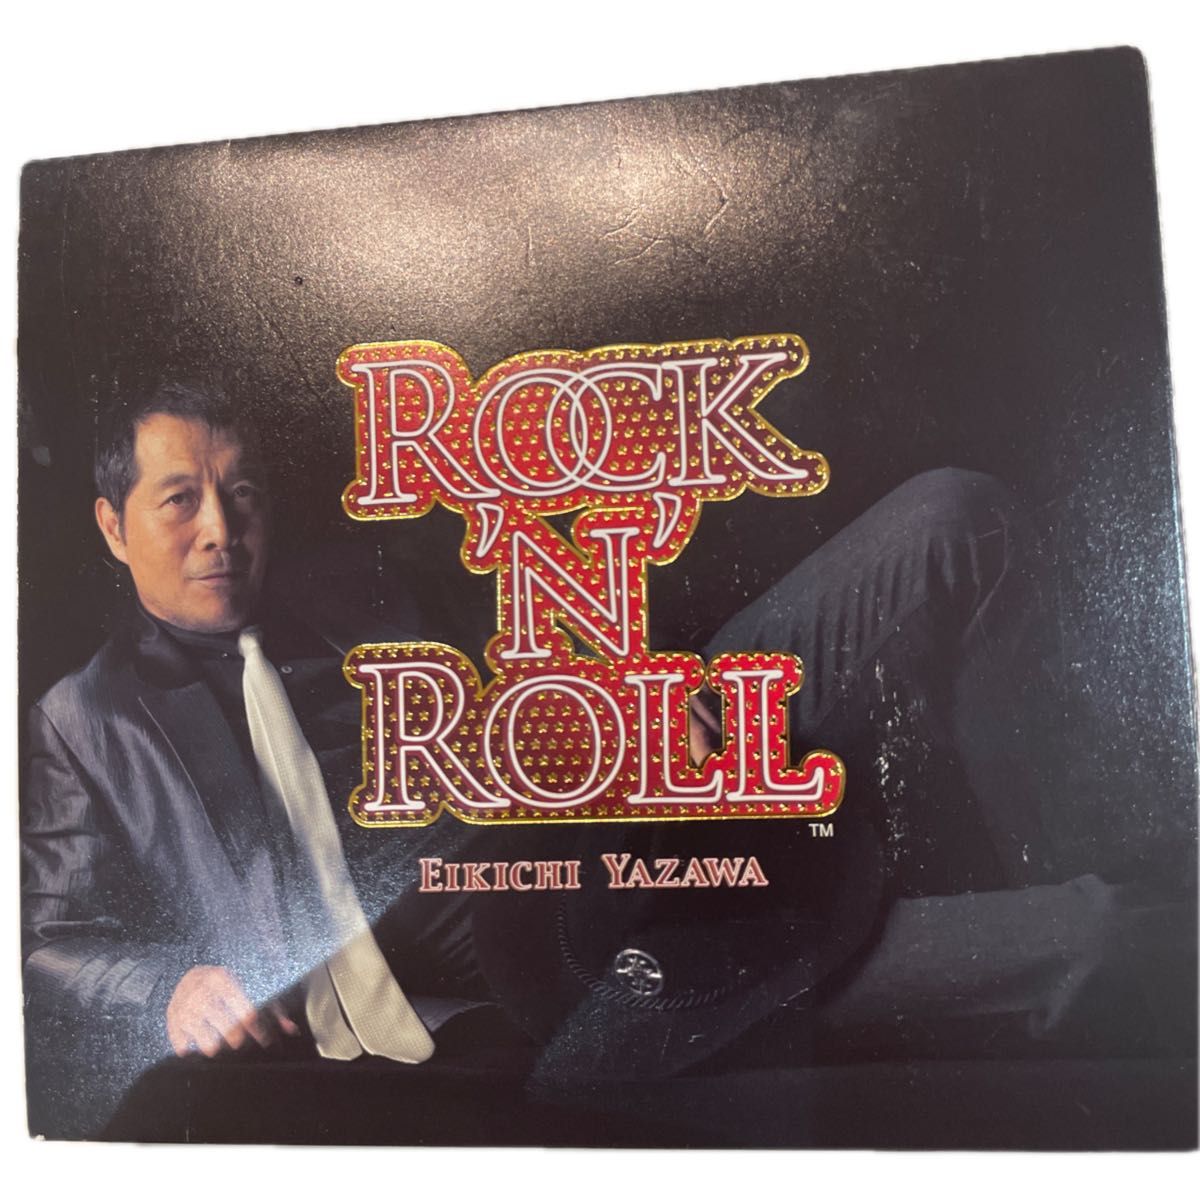 ROCK’N’ROLL EIKICHI YAZAWA